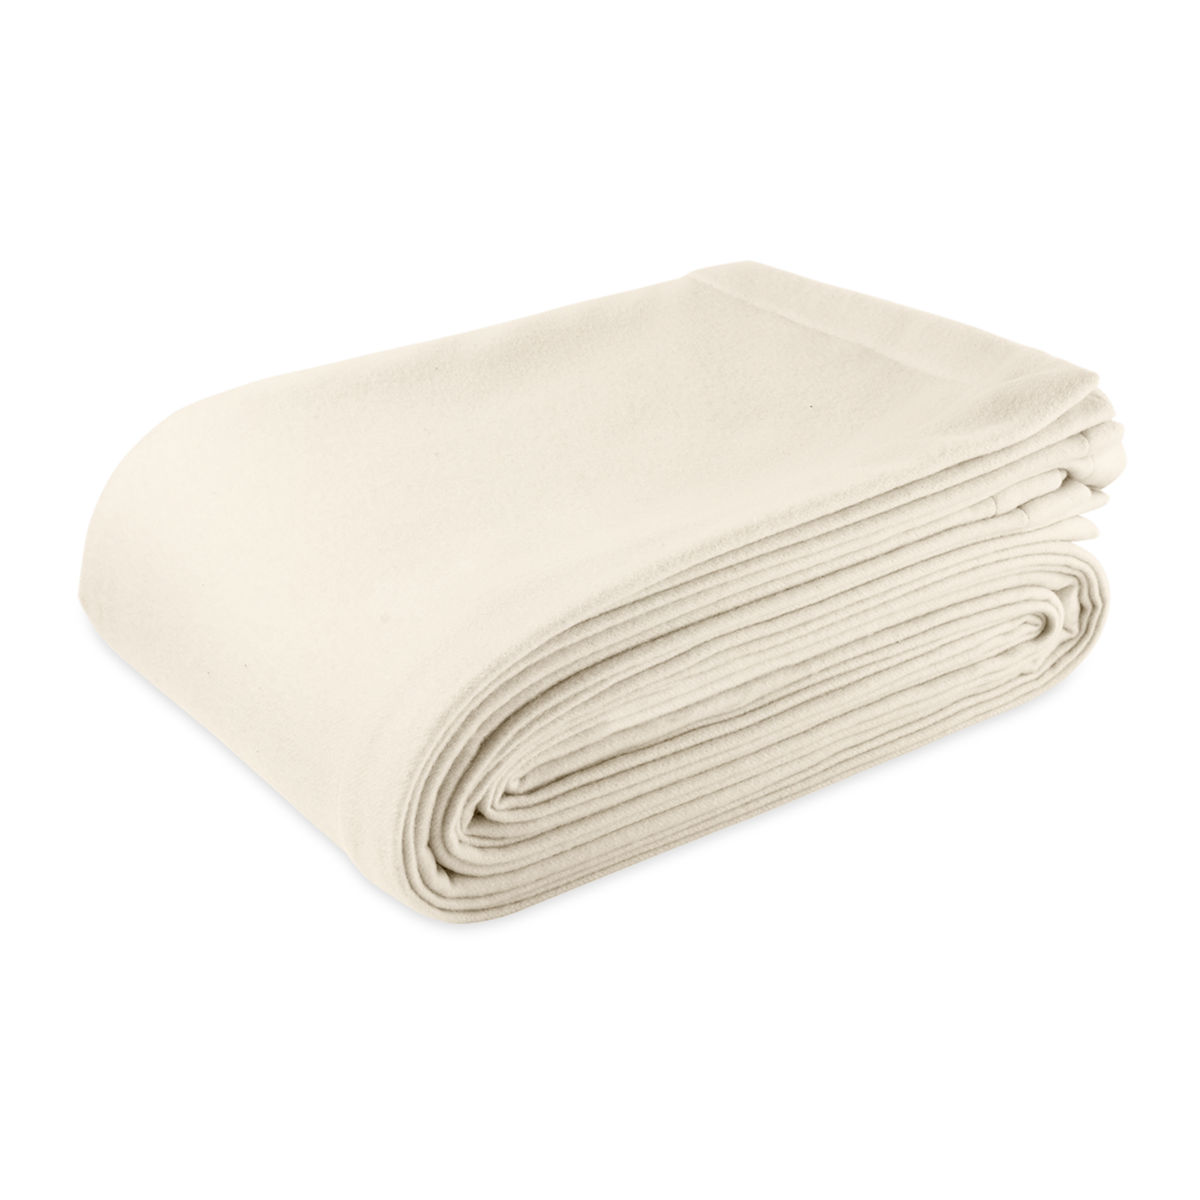 Folded Blanket of Matouk Venus Bedding in Ivory  Color